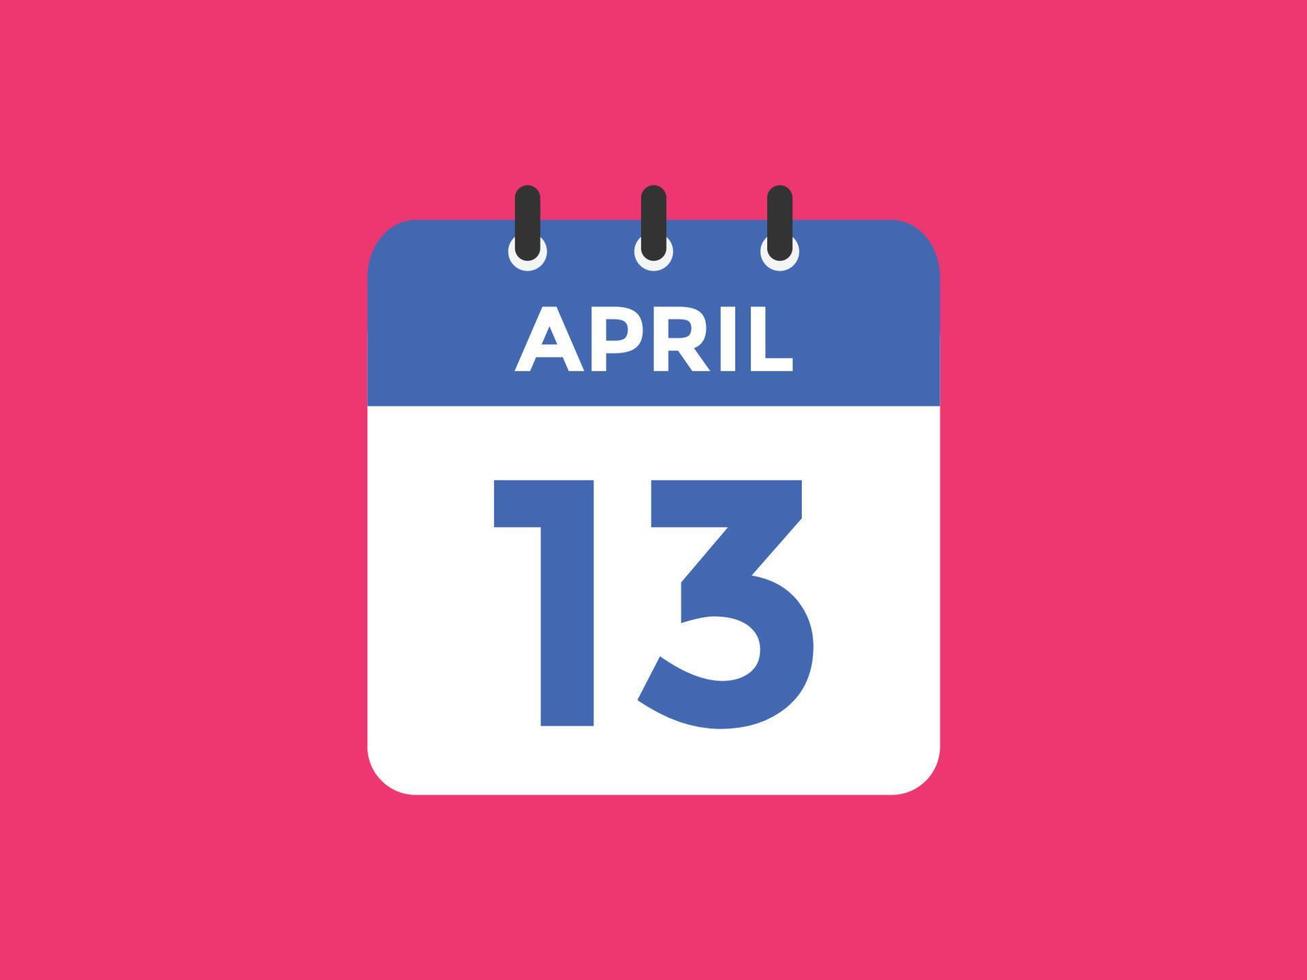 april 13 calendar reminder. 13th april daily calendar icon template. Calendar 13th april icon Design template. Vector illustration